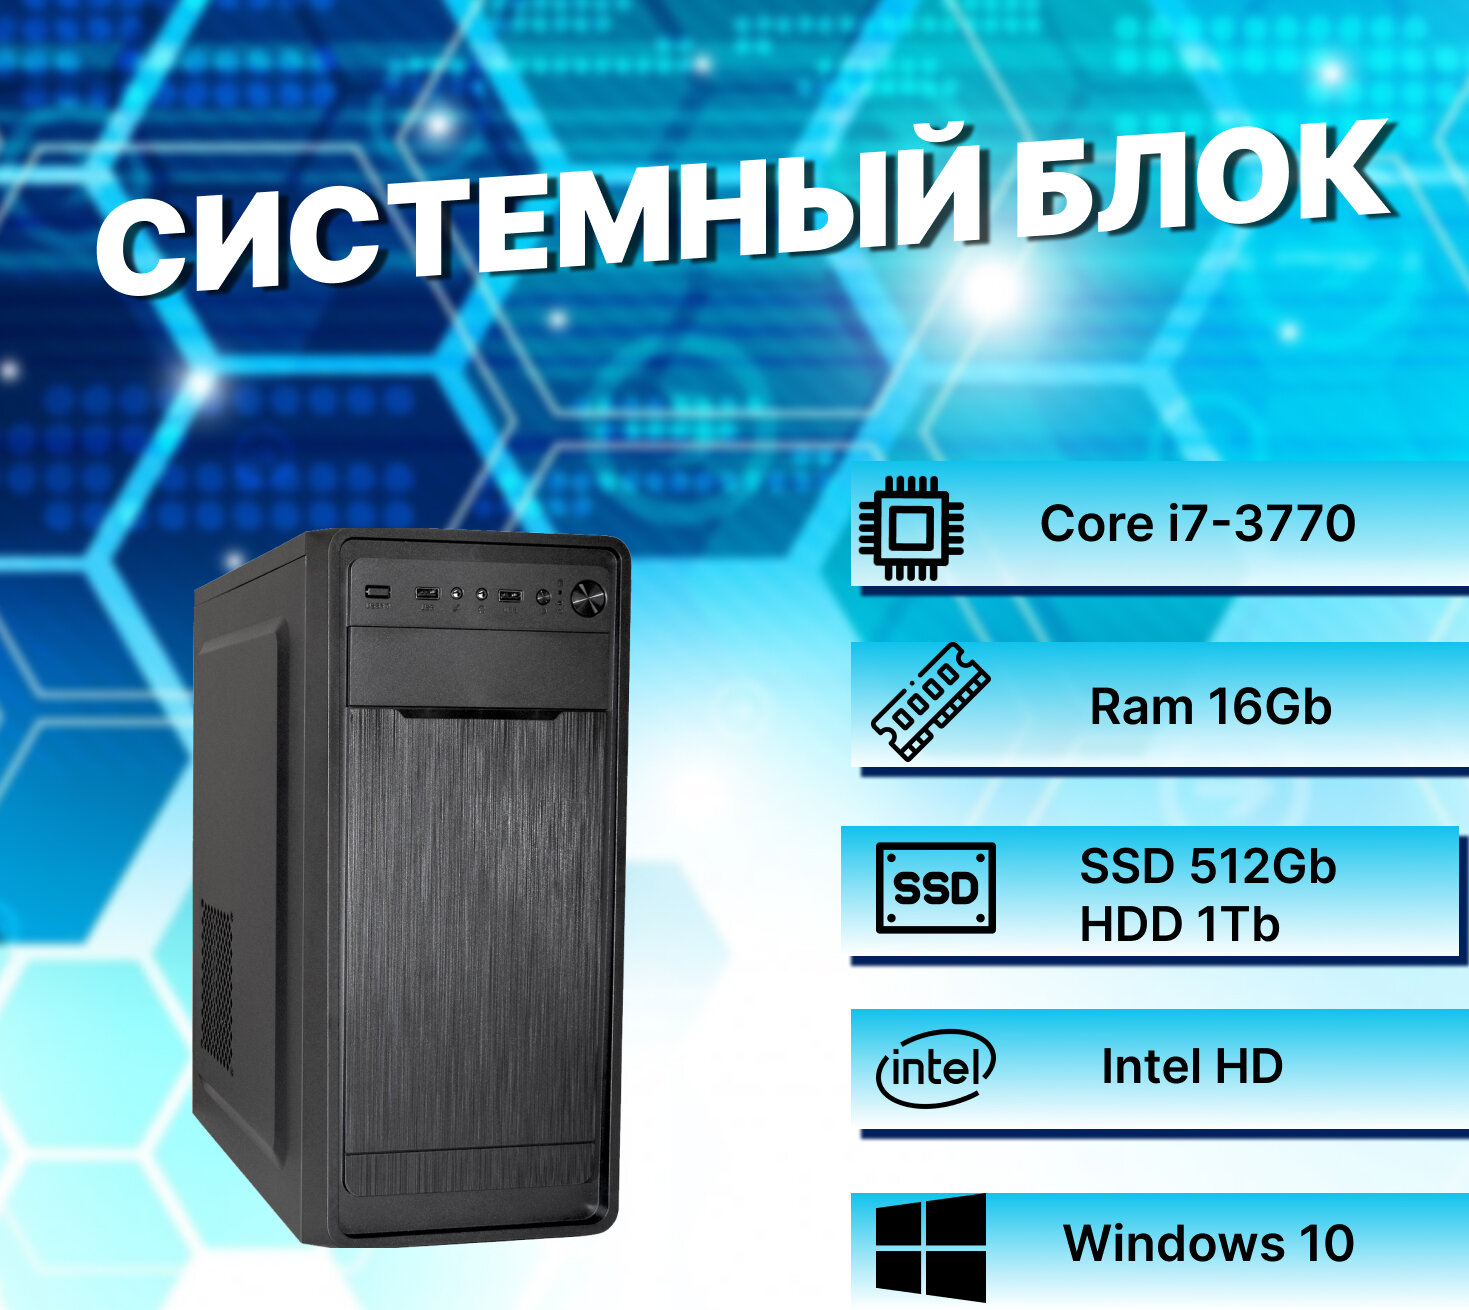 Системный блок Intel Core I7-3770 (3.4ГГц)/ RAM 16Gb/ SSD 512Gb/ HDD 1Tb/ Intel HD/ Windows 10 Pro